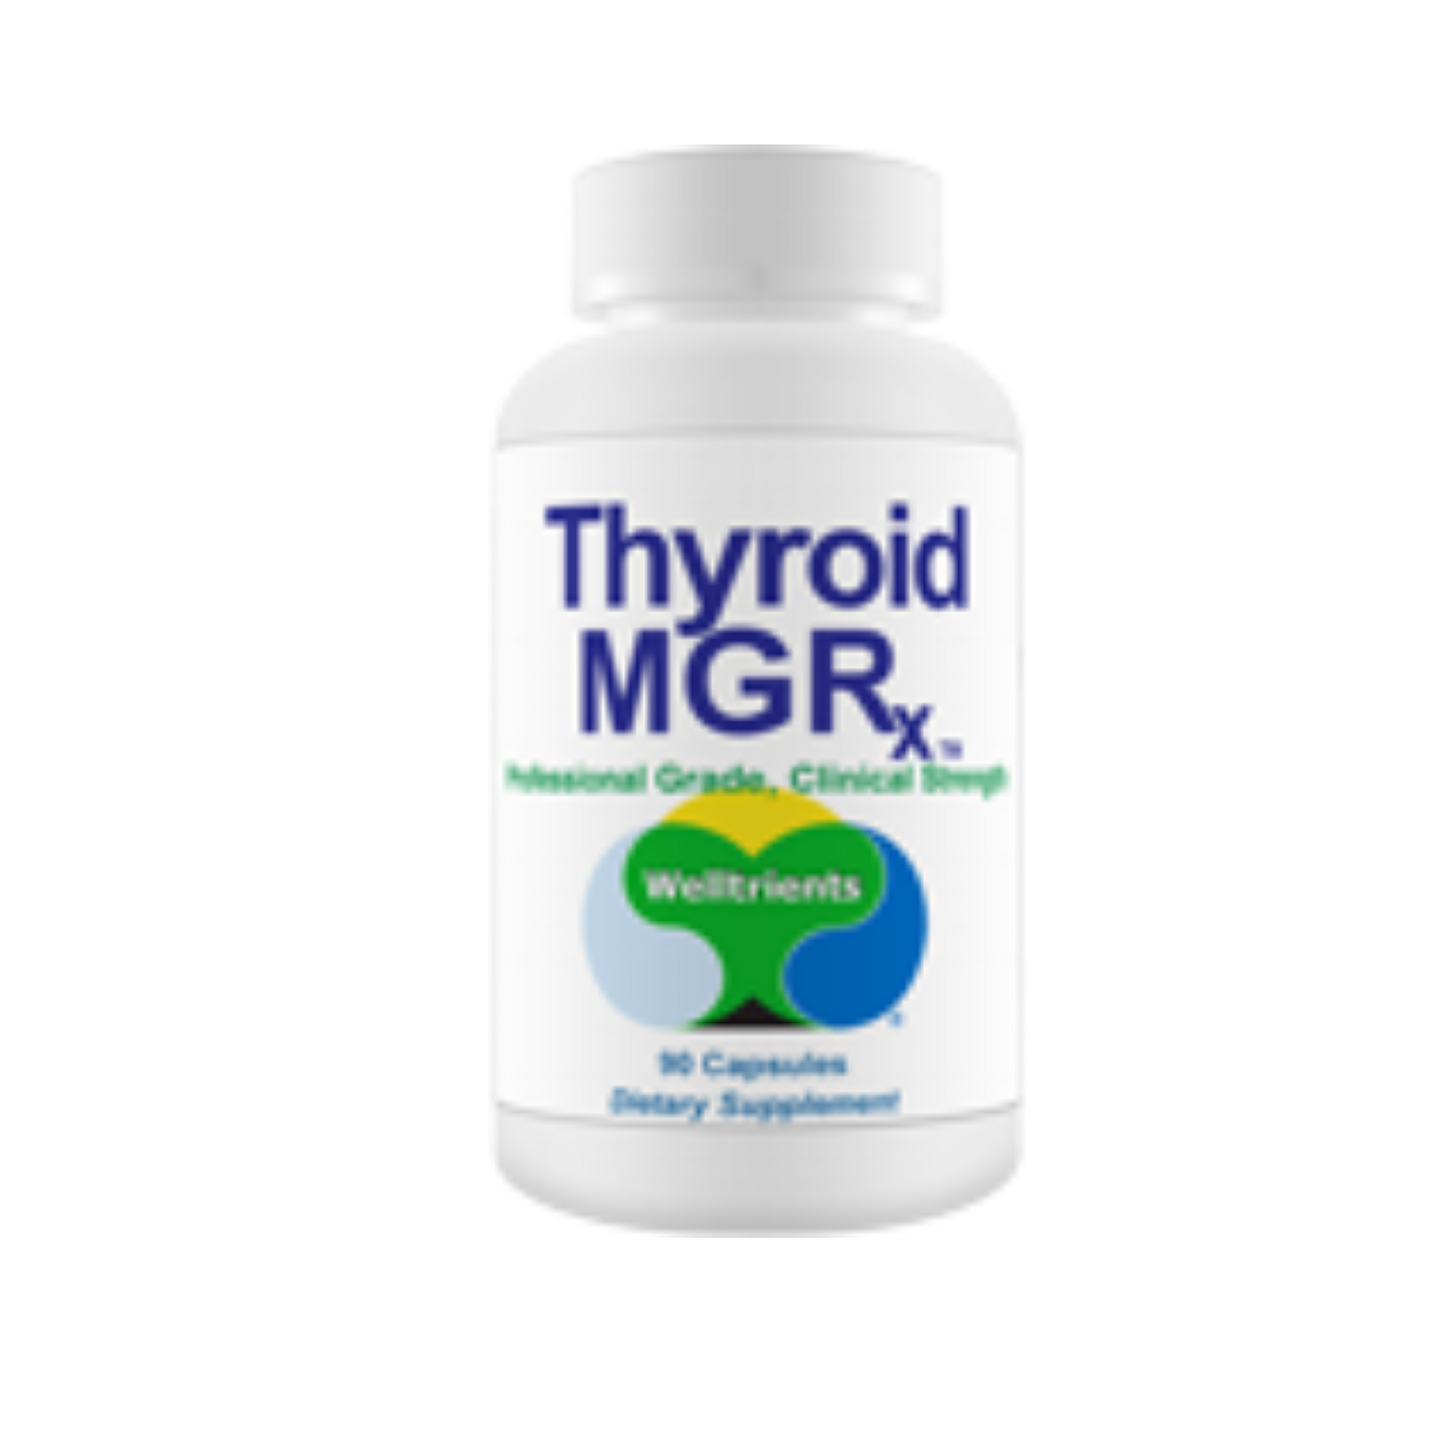 Thyroid MGRx